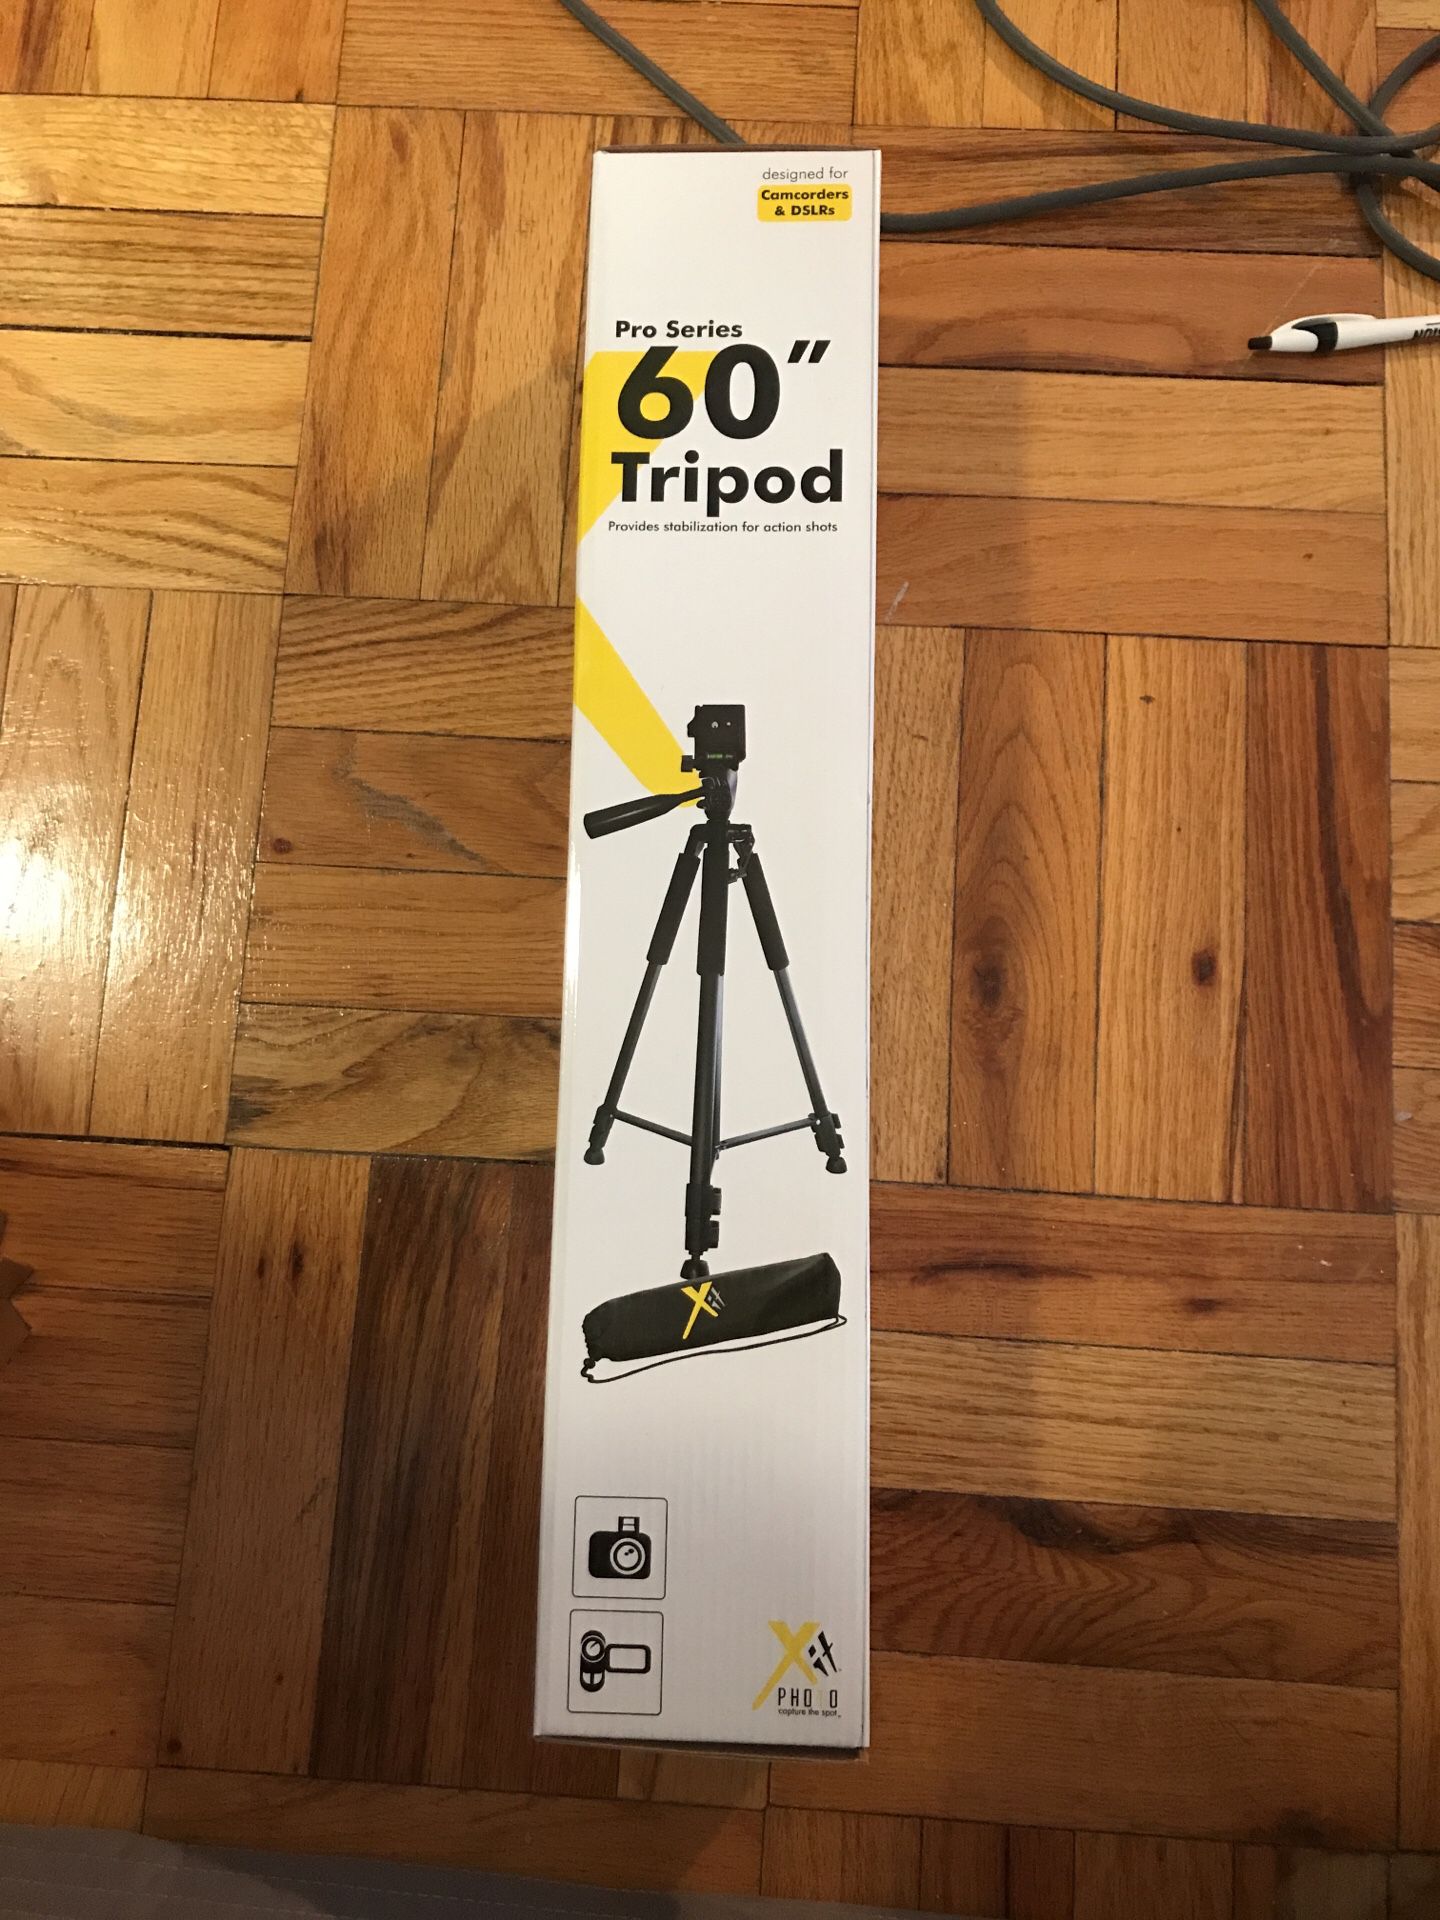 Pro Series 60” Tripod